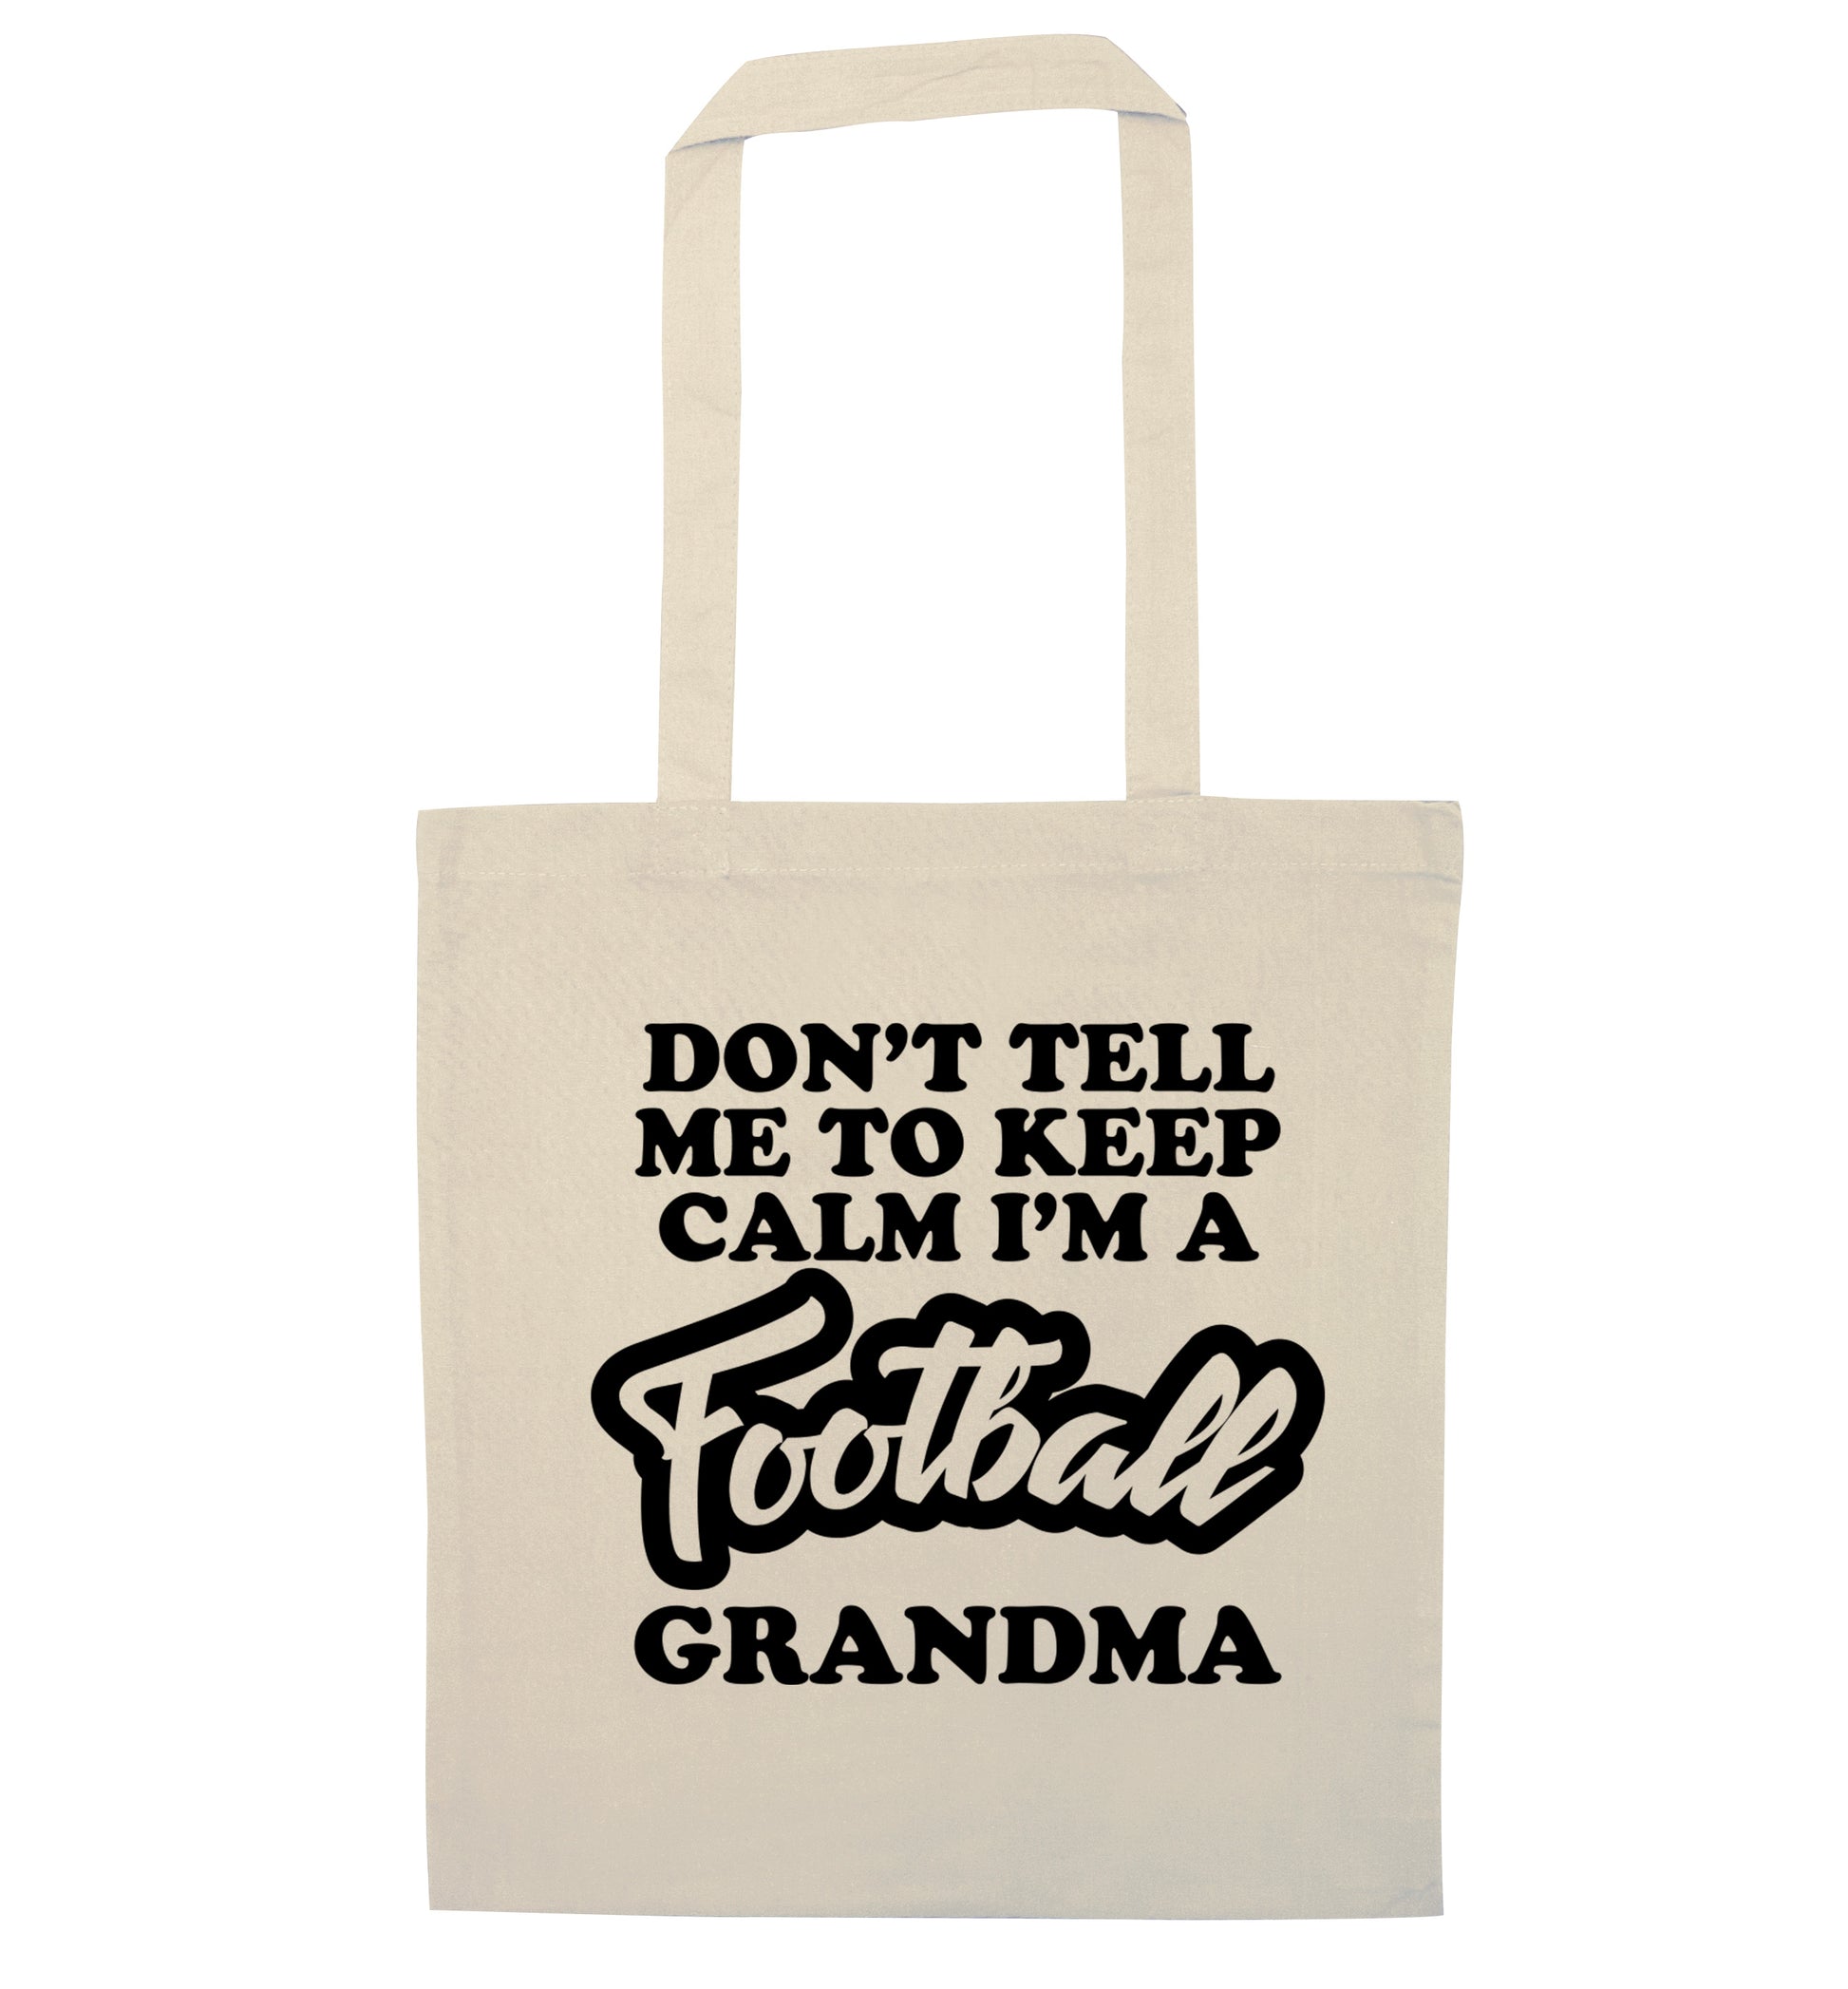 Don't tell me to keep calm I'm a football grandma natural tote bag